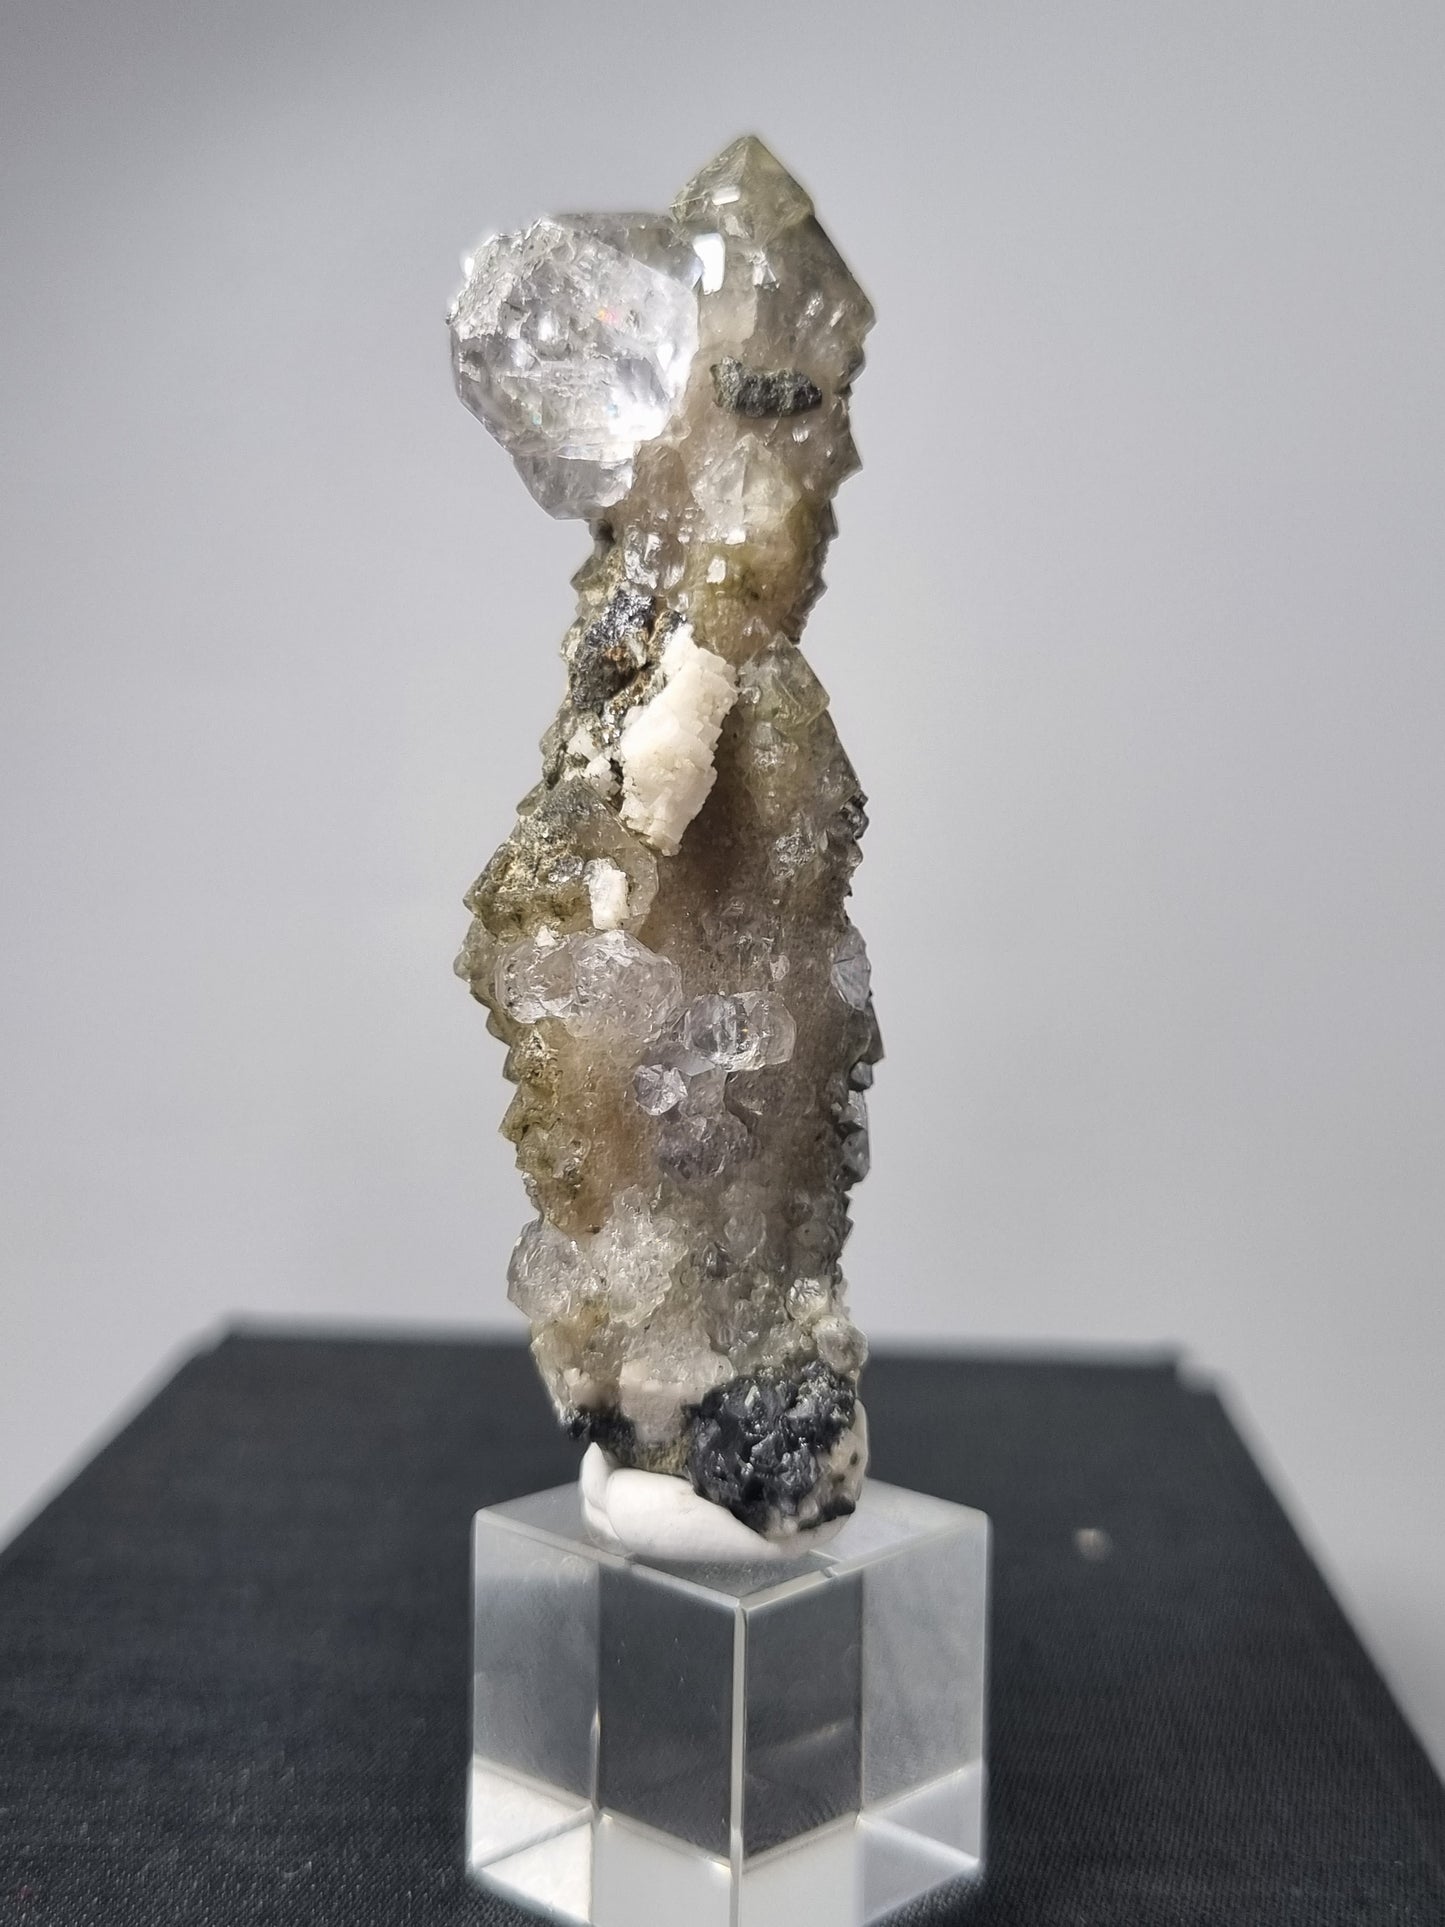 Stunning Mineral Specimen, Elestial Scepter like, Cumberland Habit Quartz with Fluorite